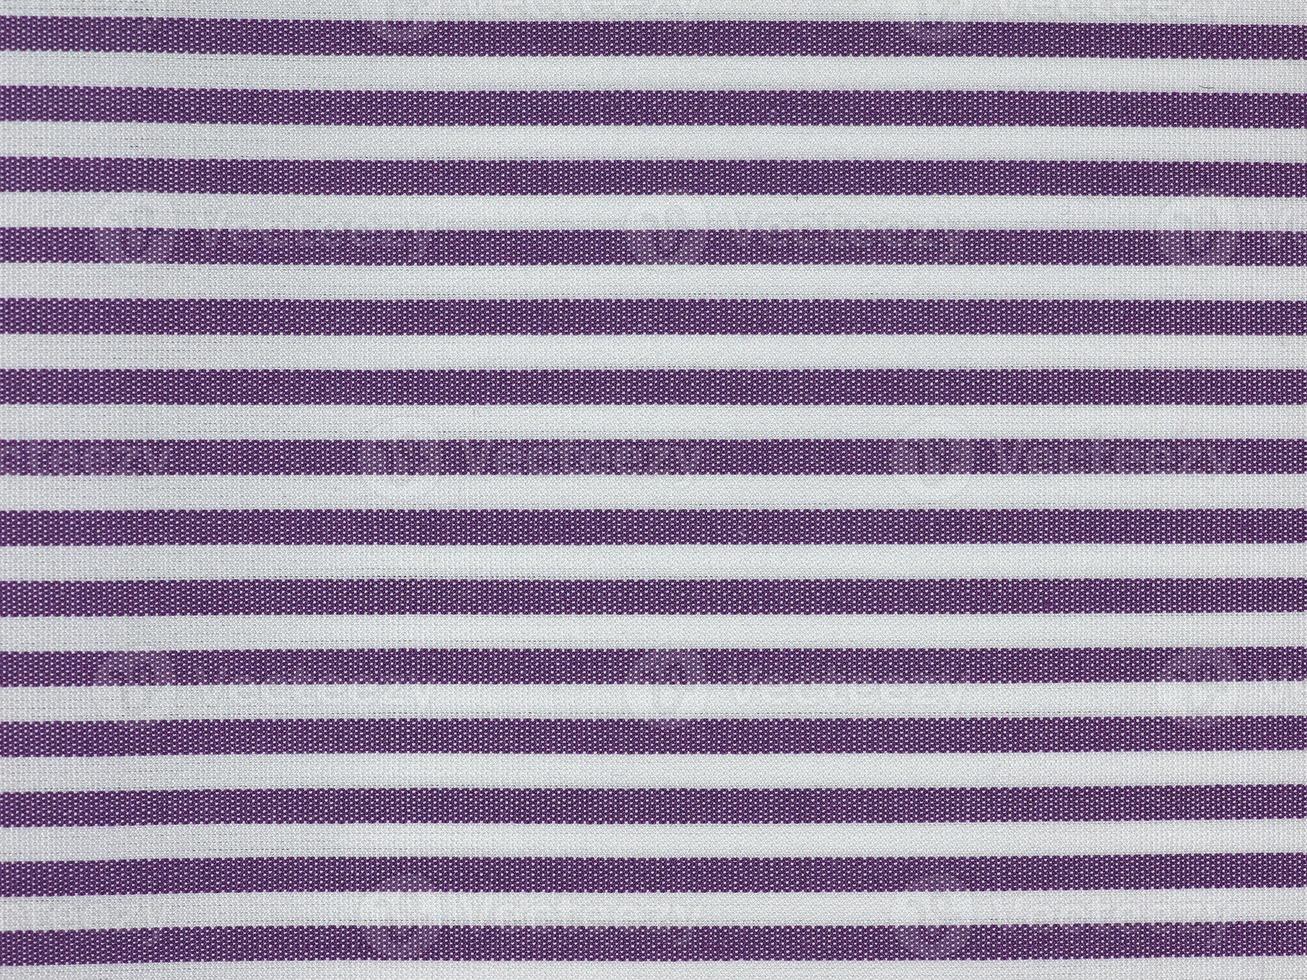 violet gestreepte stof textuur achtergrond foto